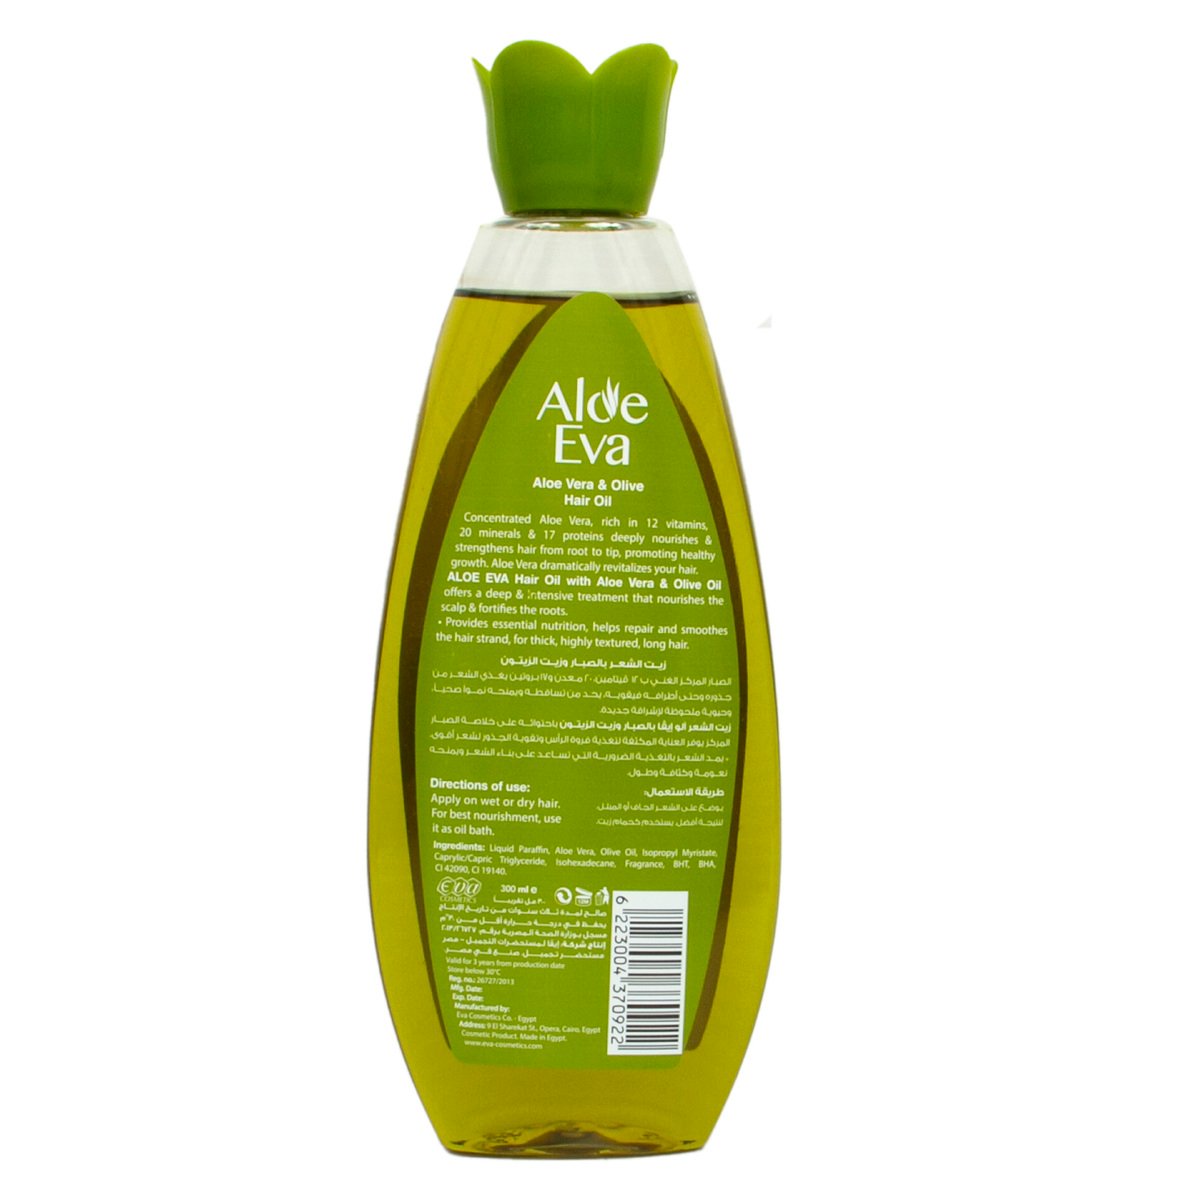 Aloe Eva Strengthening Hair Oil Aloe Vera And Olive Oil 300 ml